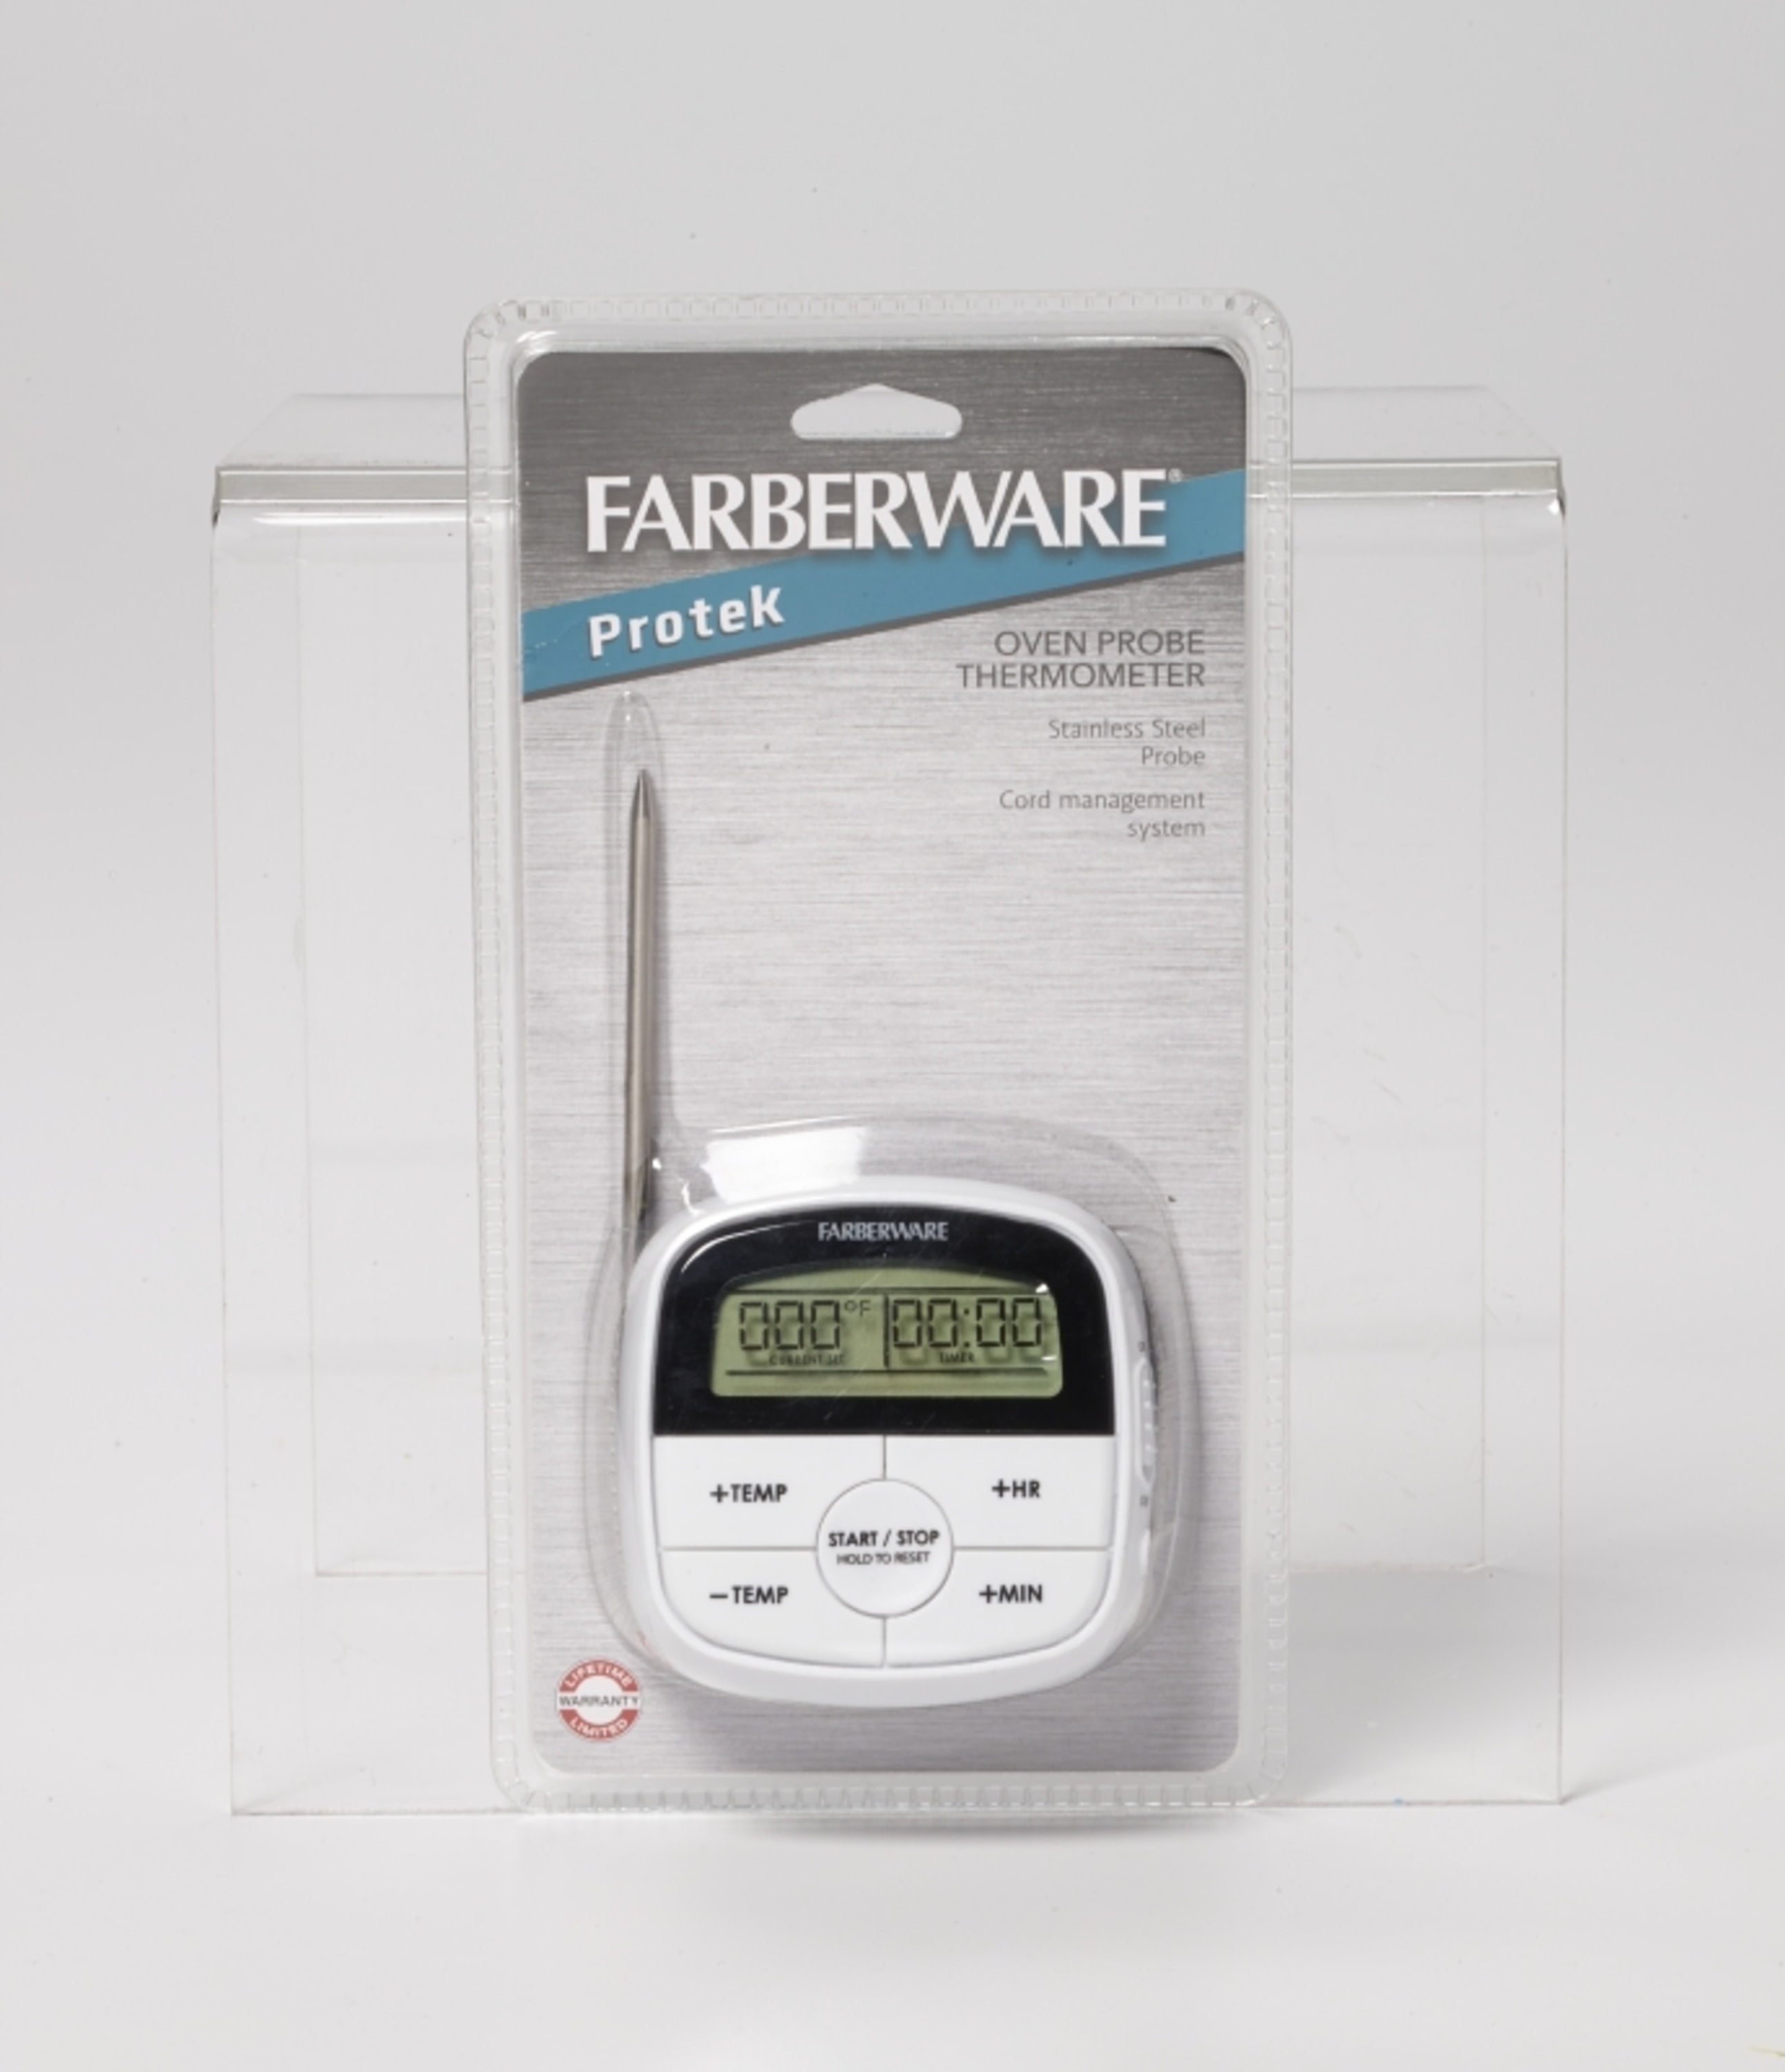 Farberware BBQ Instant Read Thermometer